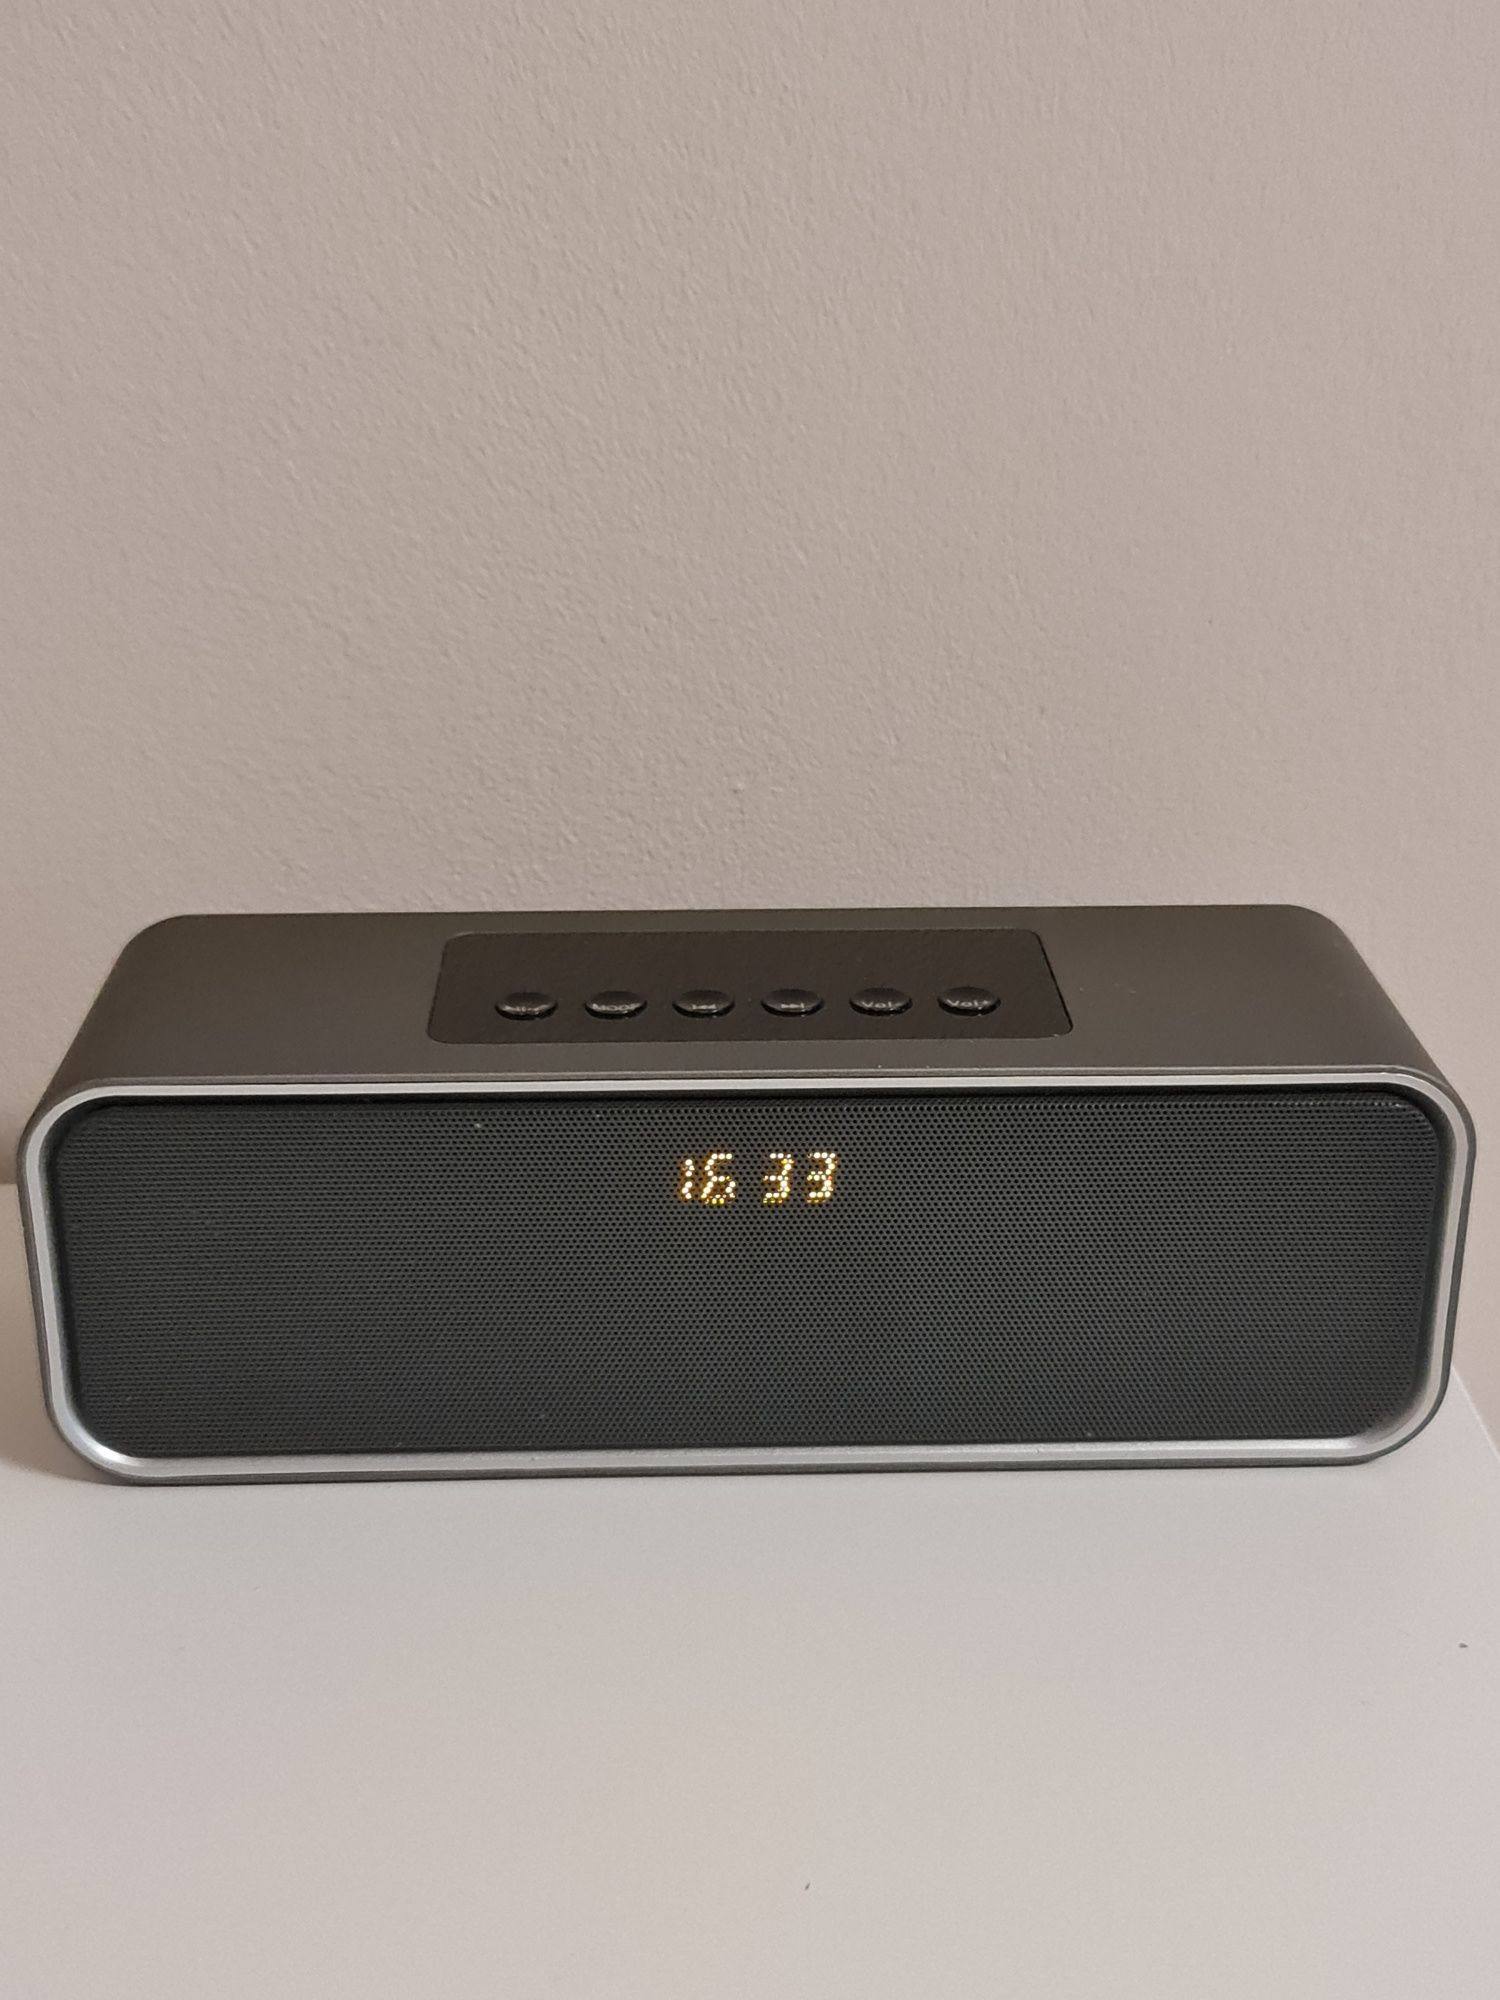 Boxa stereo portabila Platinet cu ceas + radio